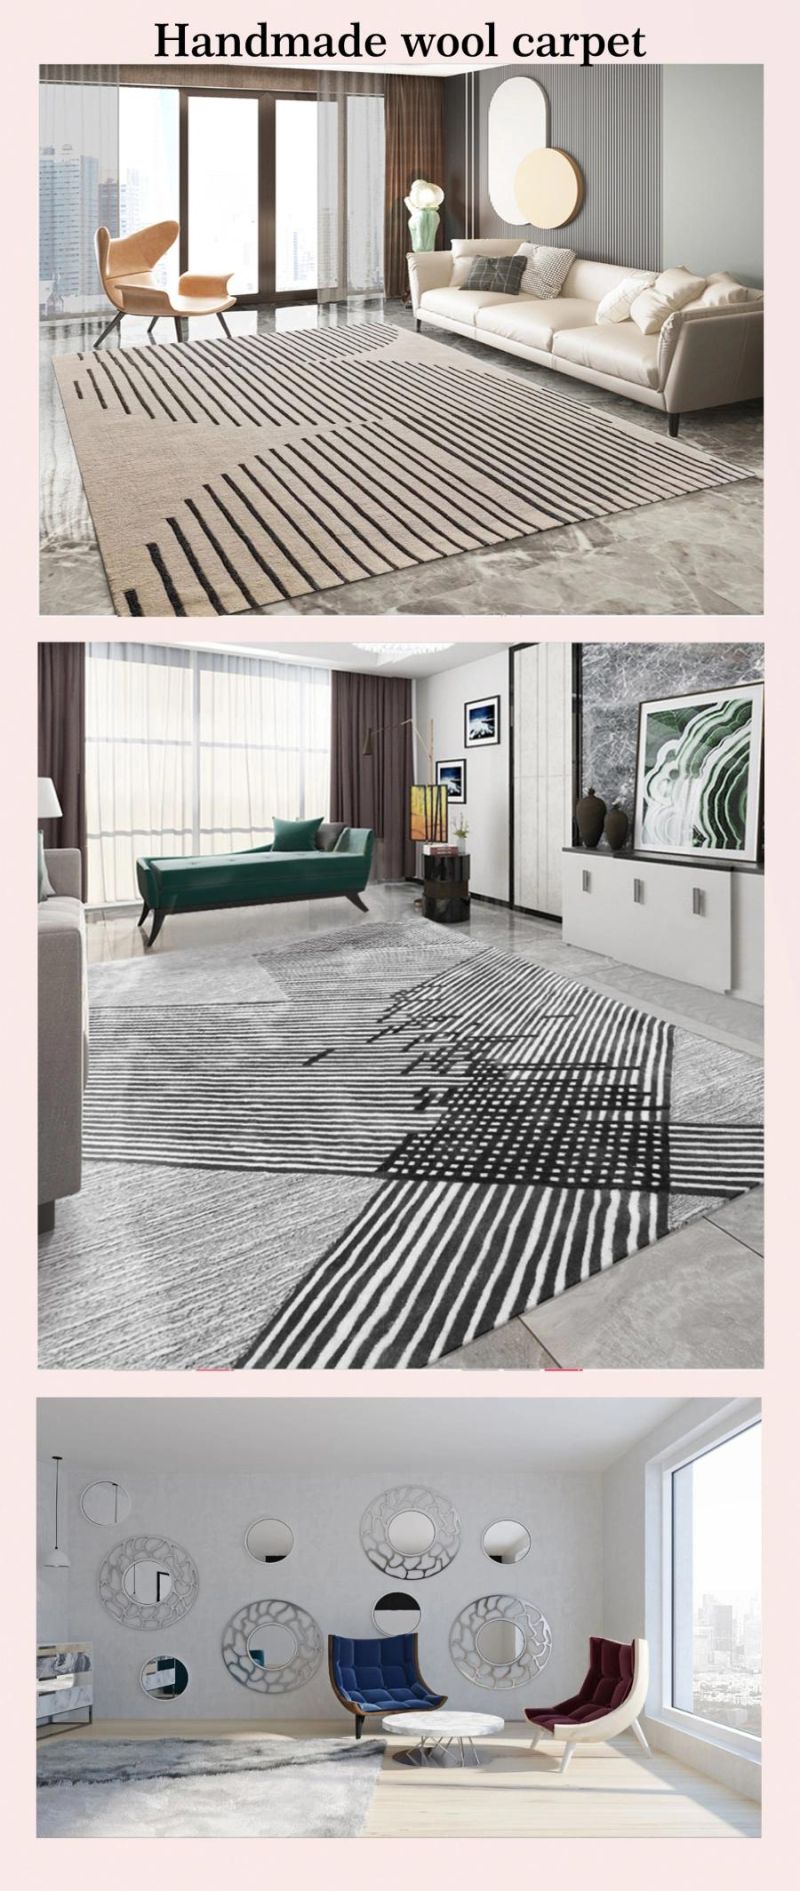 Good Quality Modern Carpet Living Room Home Carpet Bedroom 100% Polyester Rug Sofa Coffee Table Floor Mat Carpet